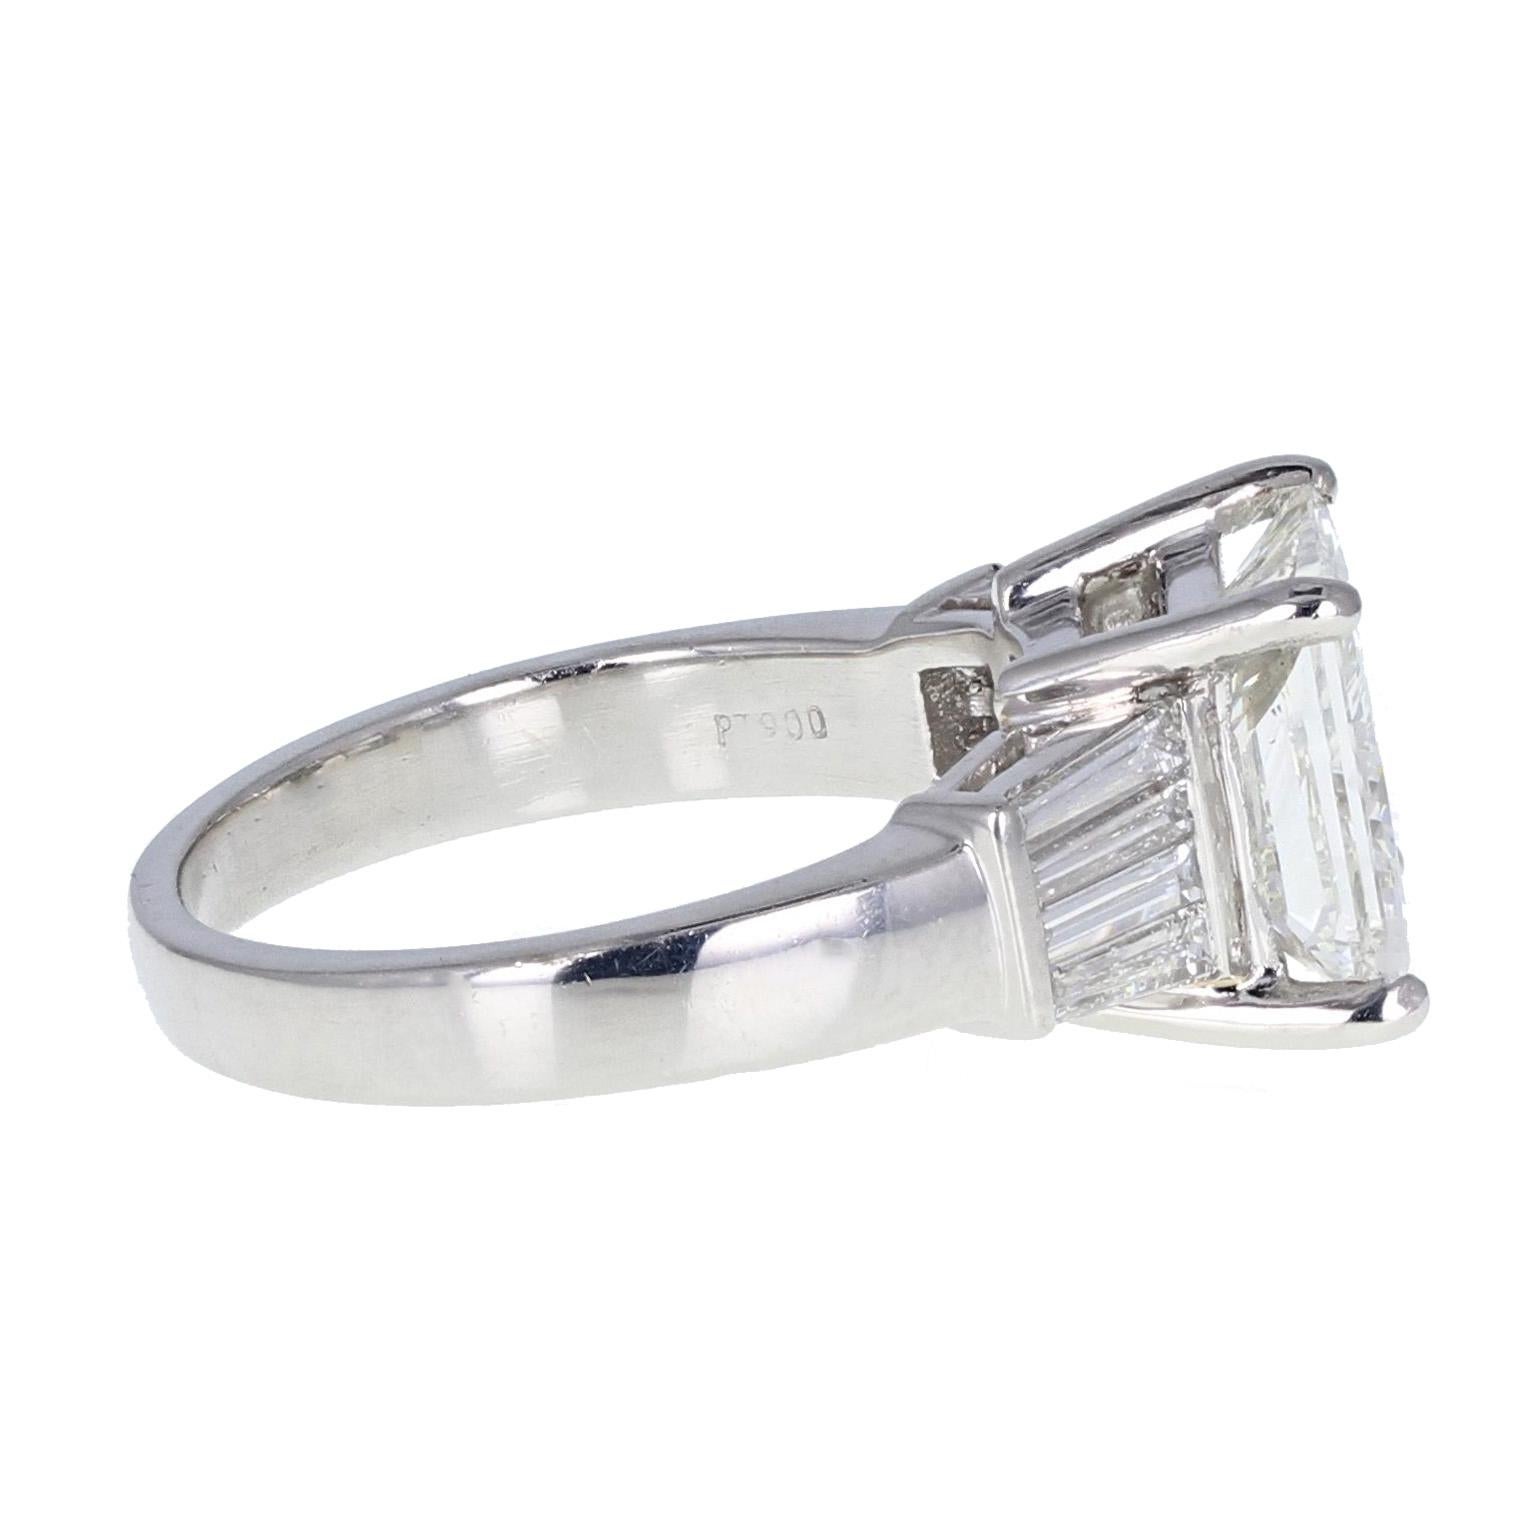 2 carat princess cut diamond solitaire engagement ring